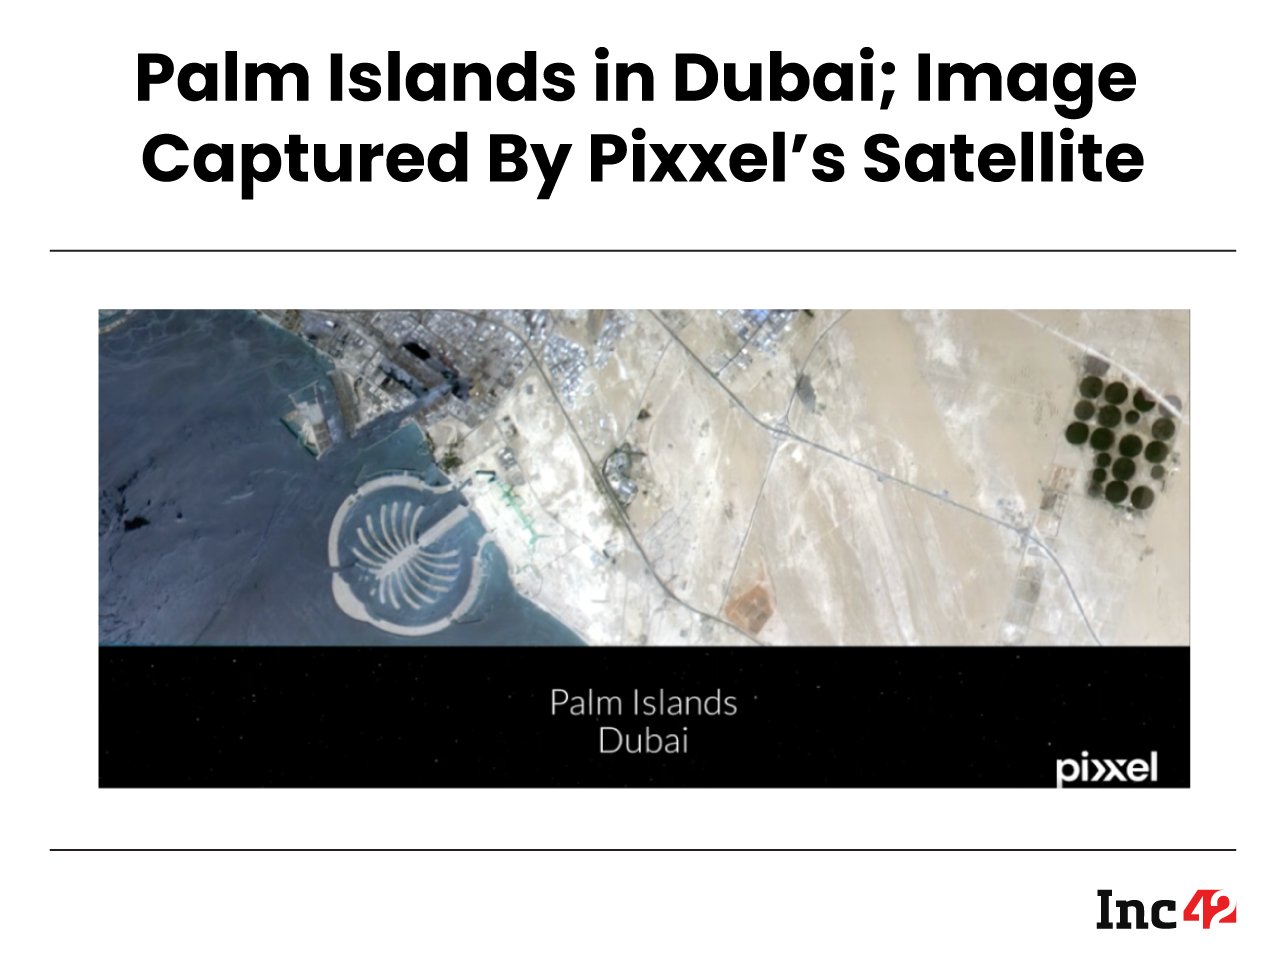 pixxel captured palm island